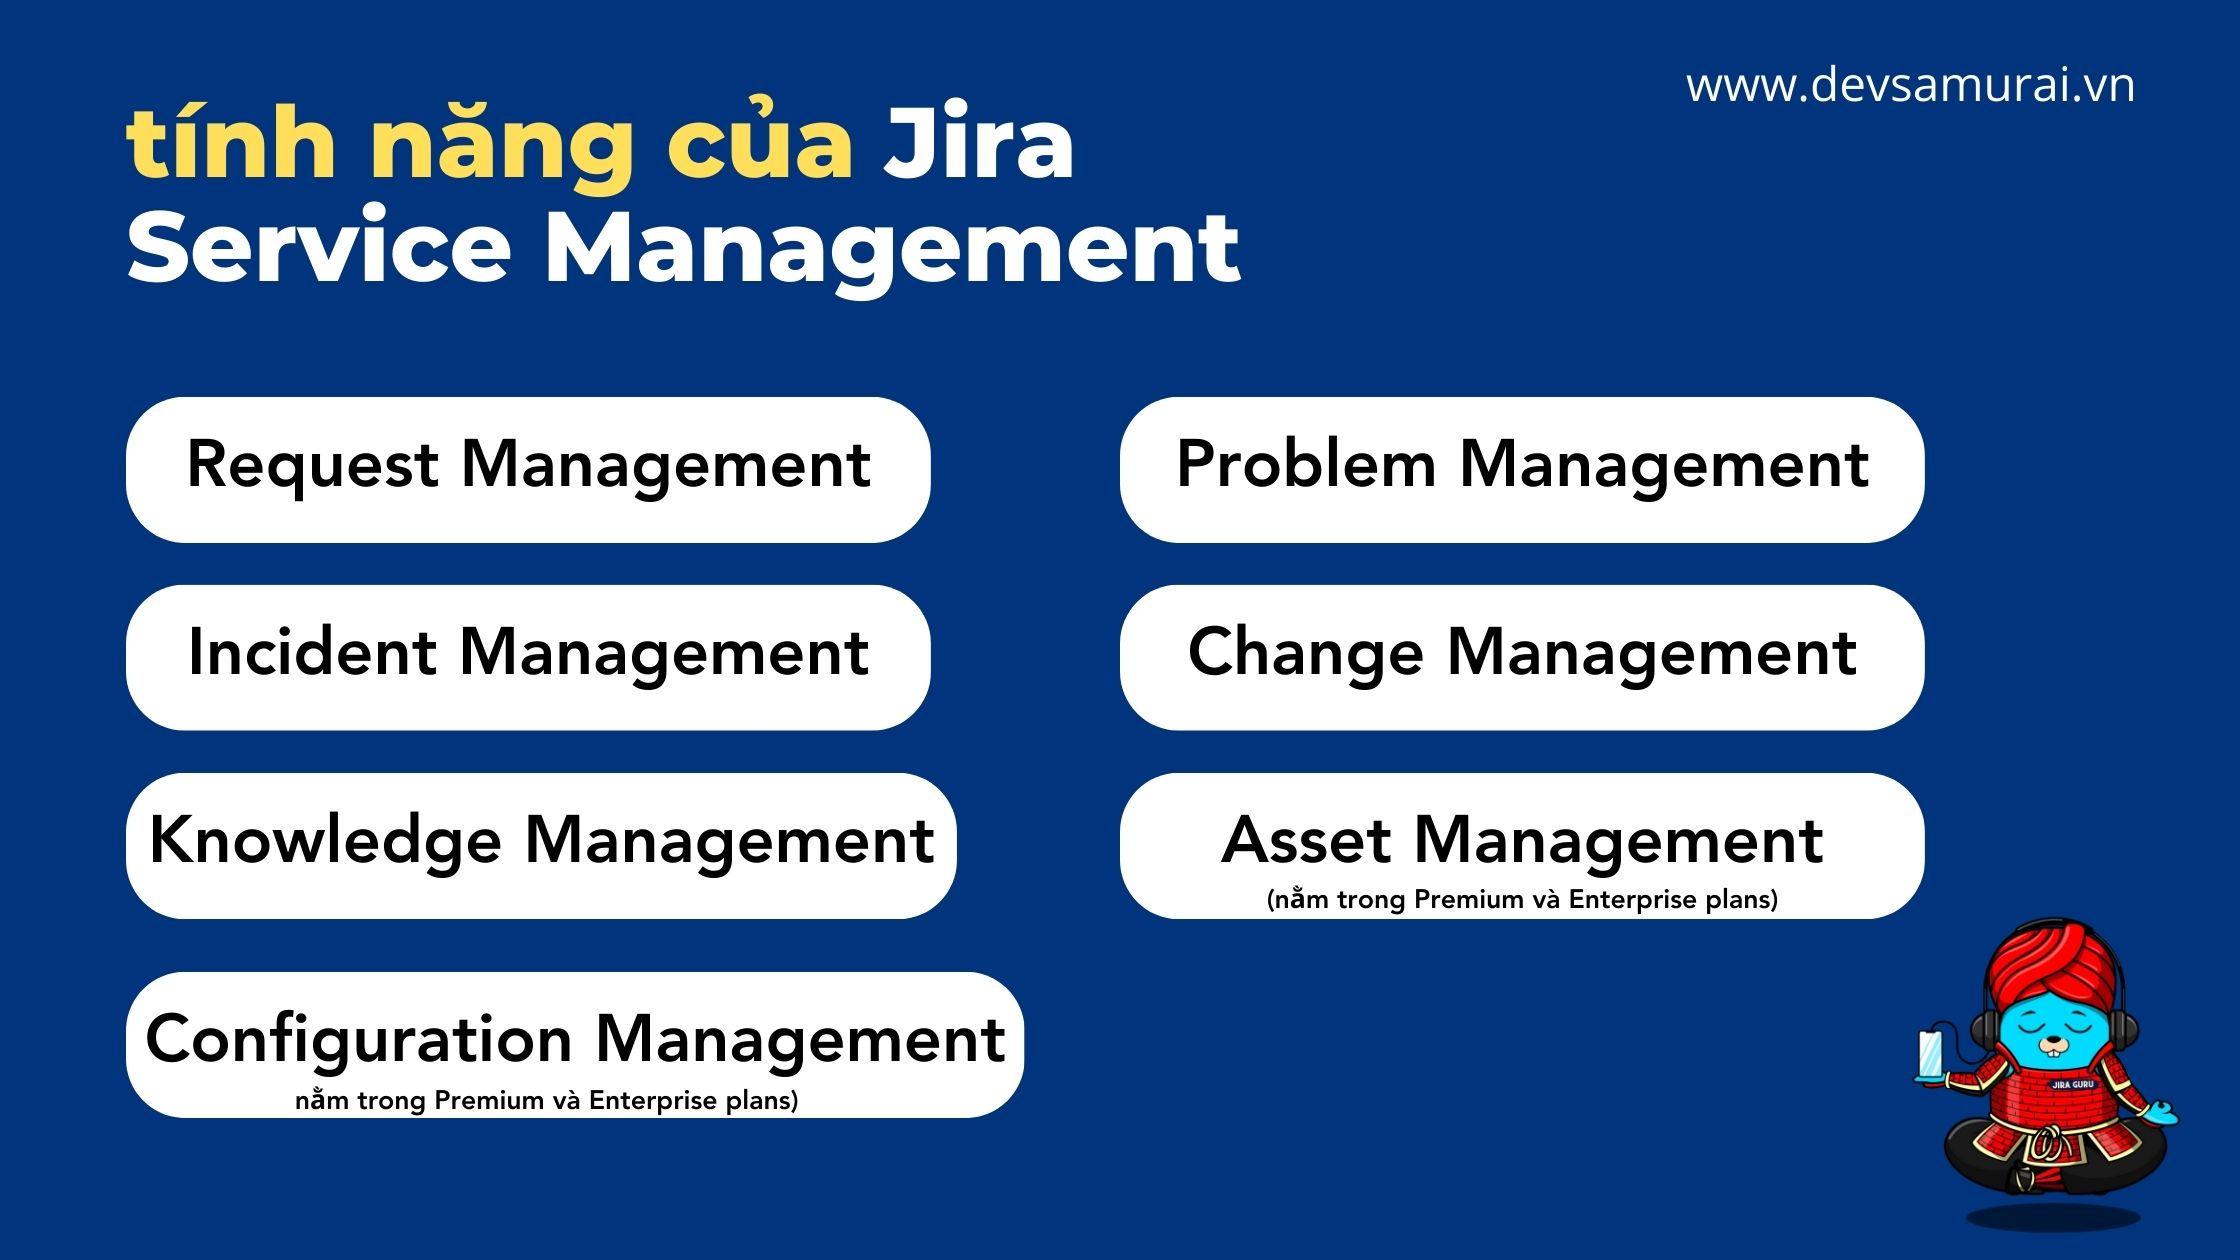 Jira Service Management Feature